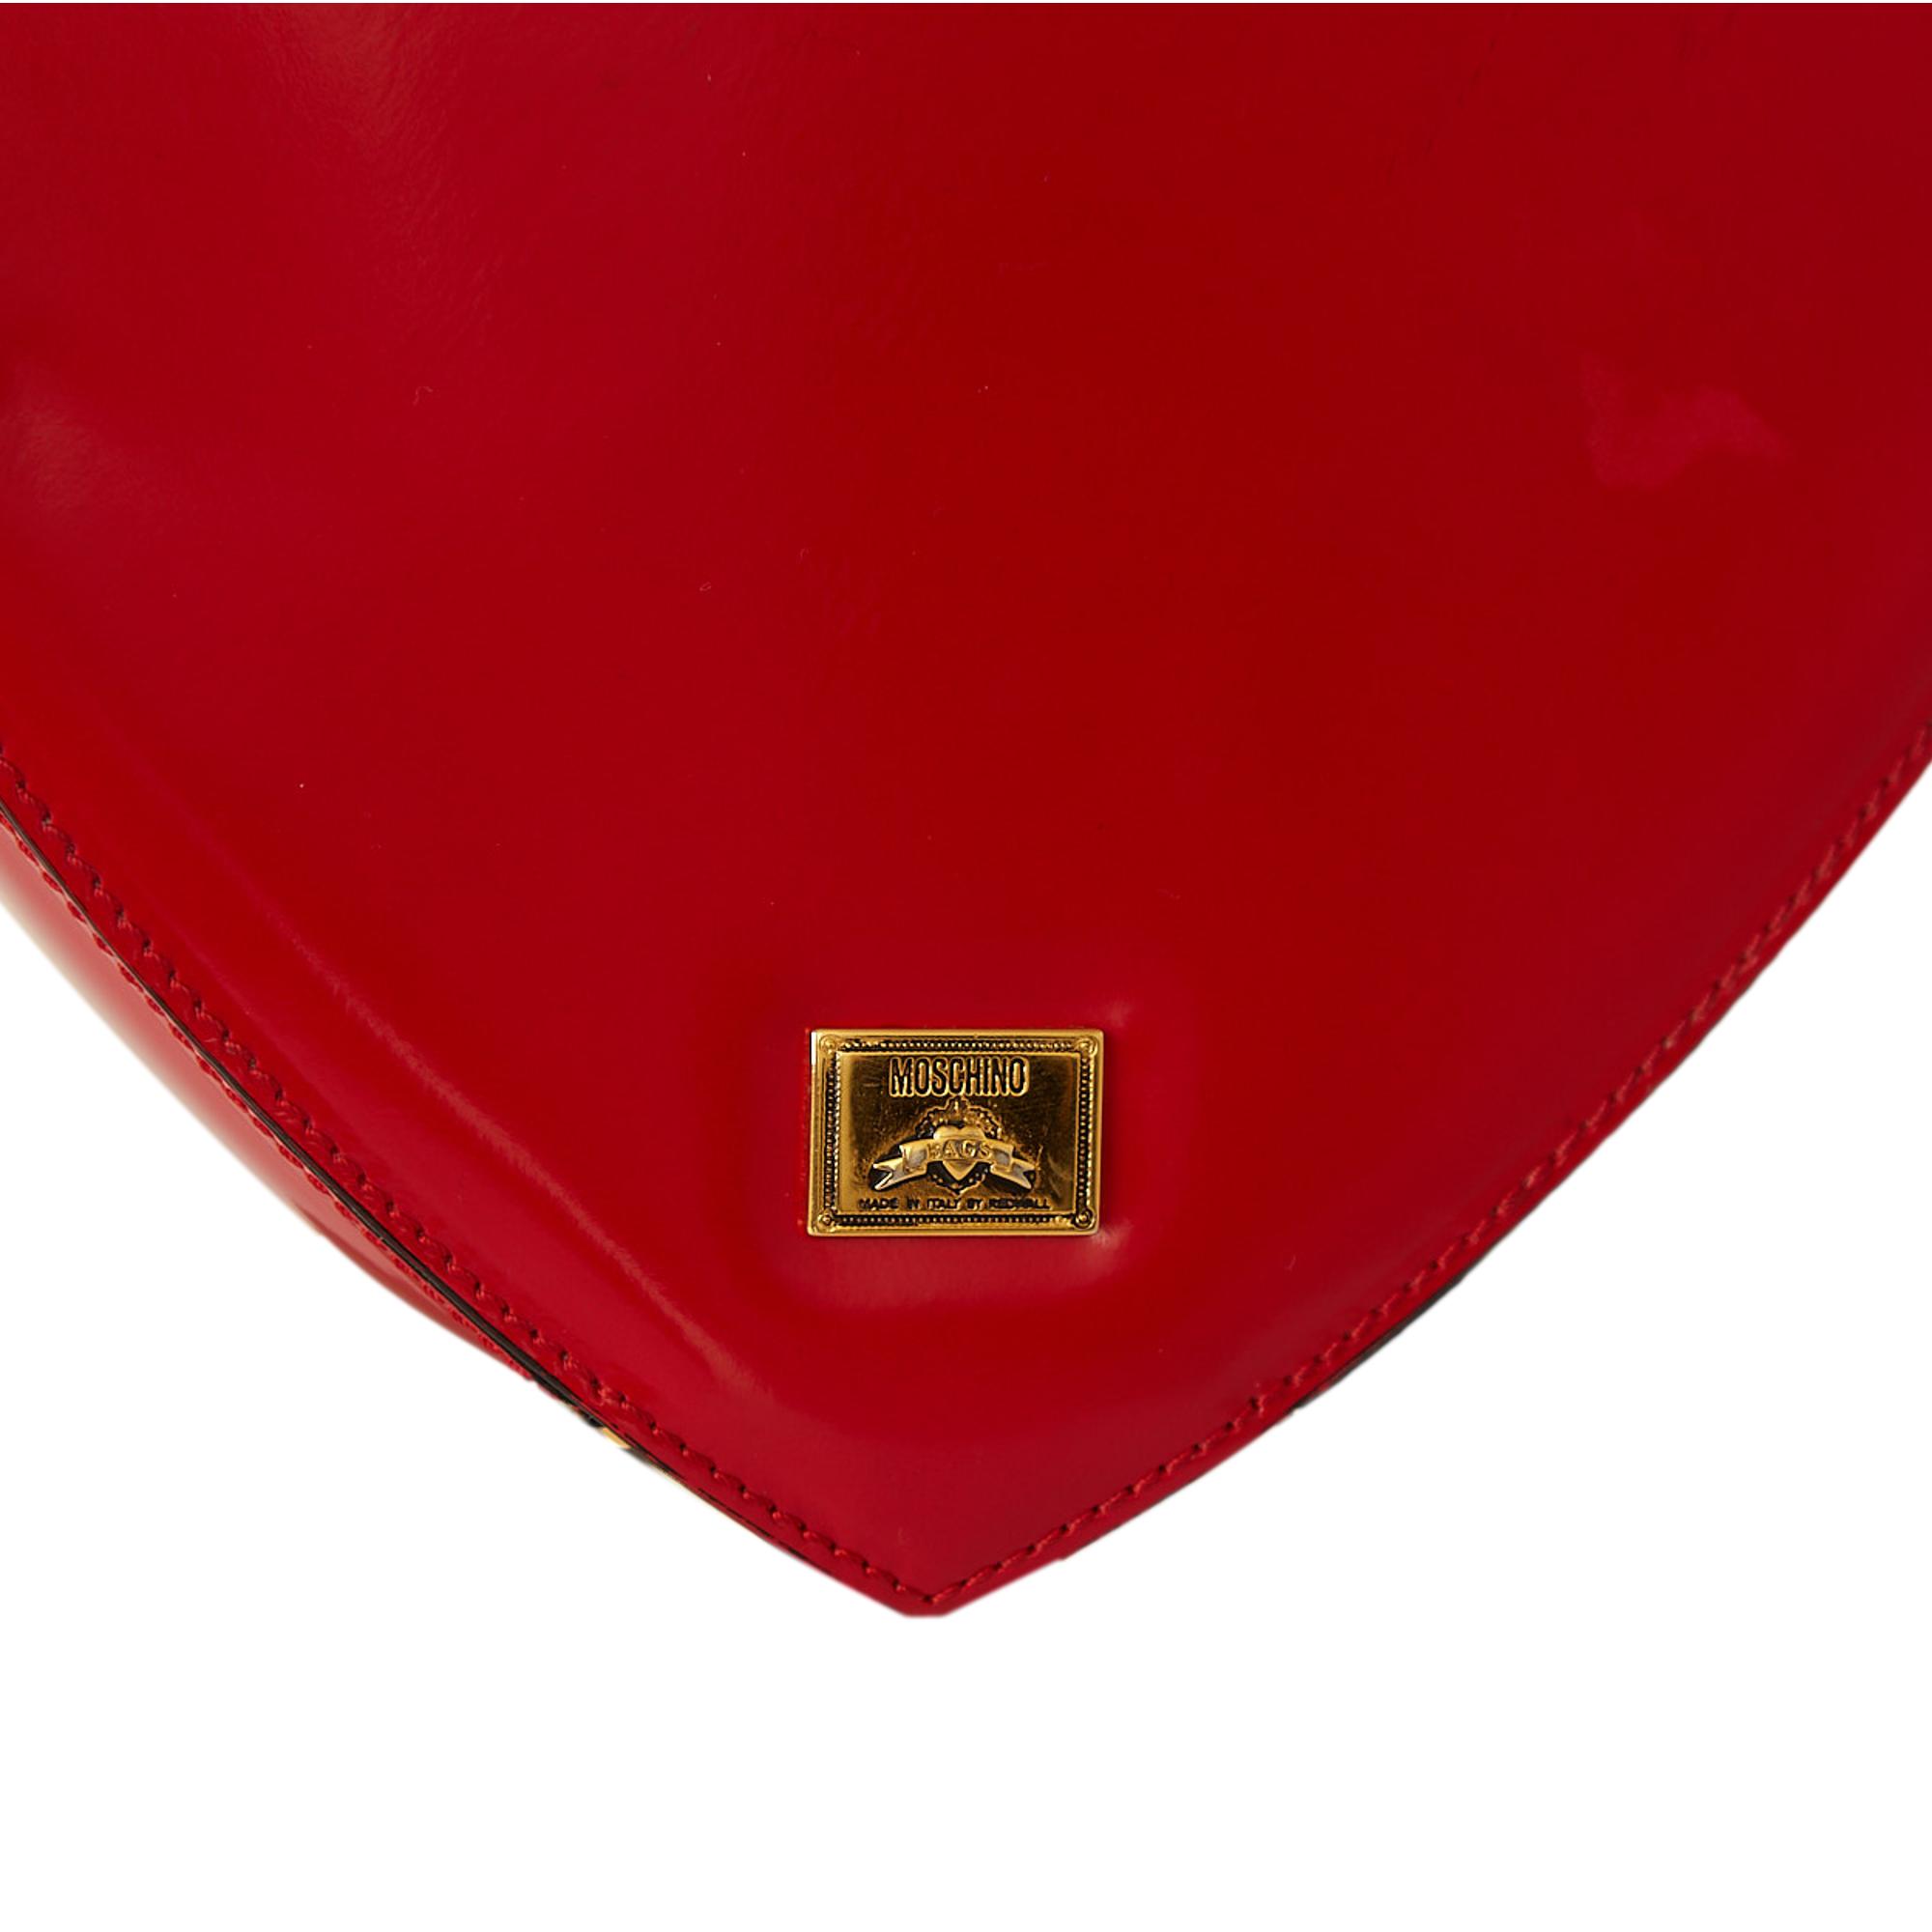 Moschino Red Heart Nanny Bag